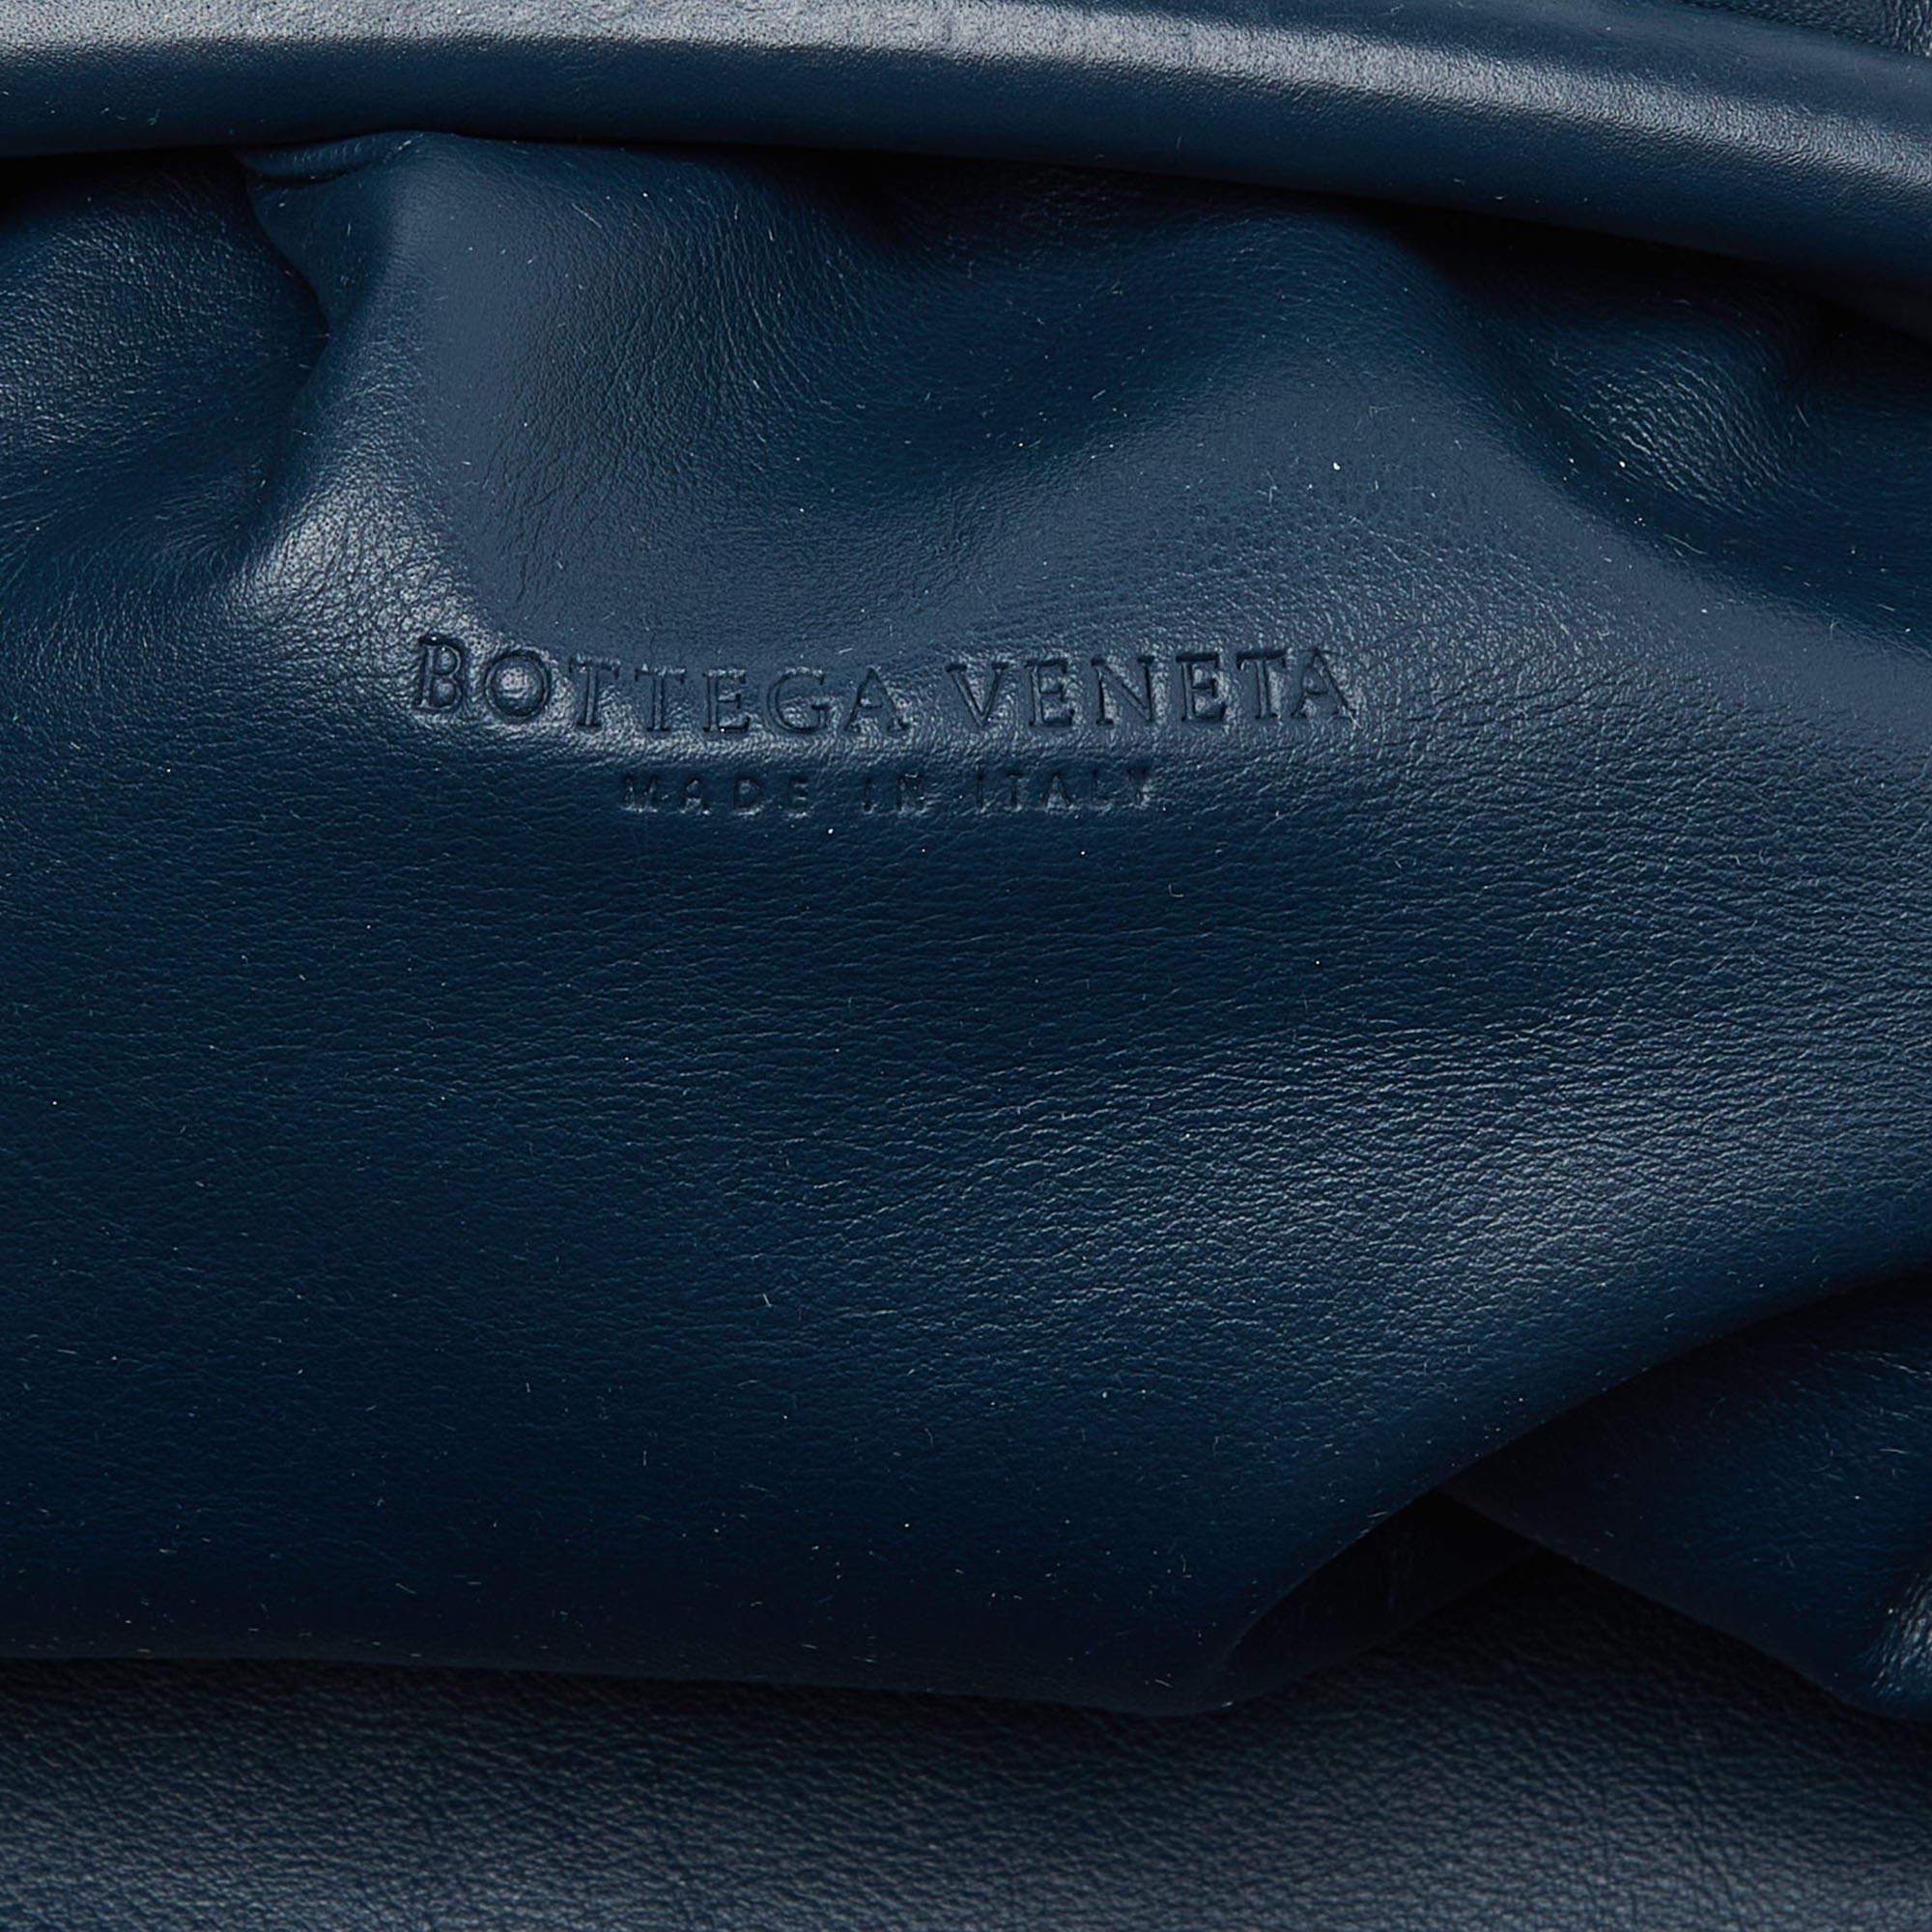 Bottega Veneta Teal Blue Leather The Pouch Clutch For Sale 4